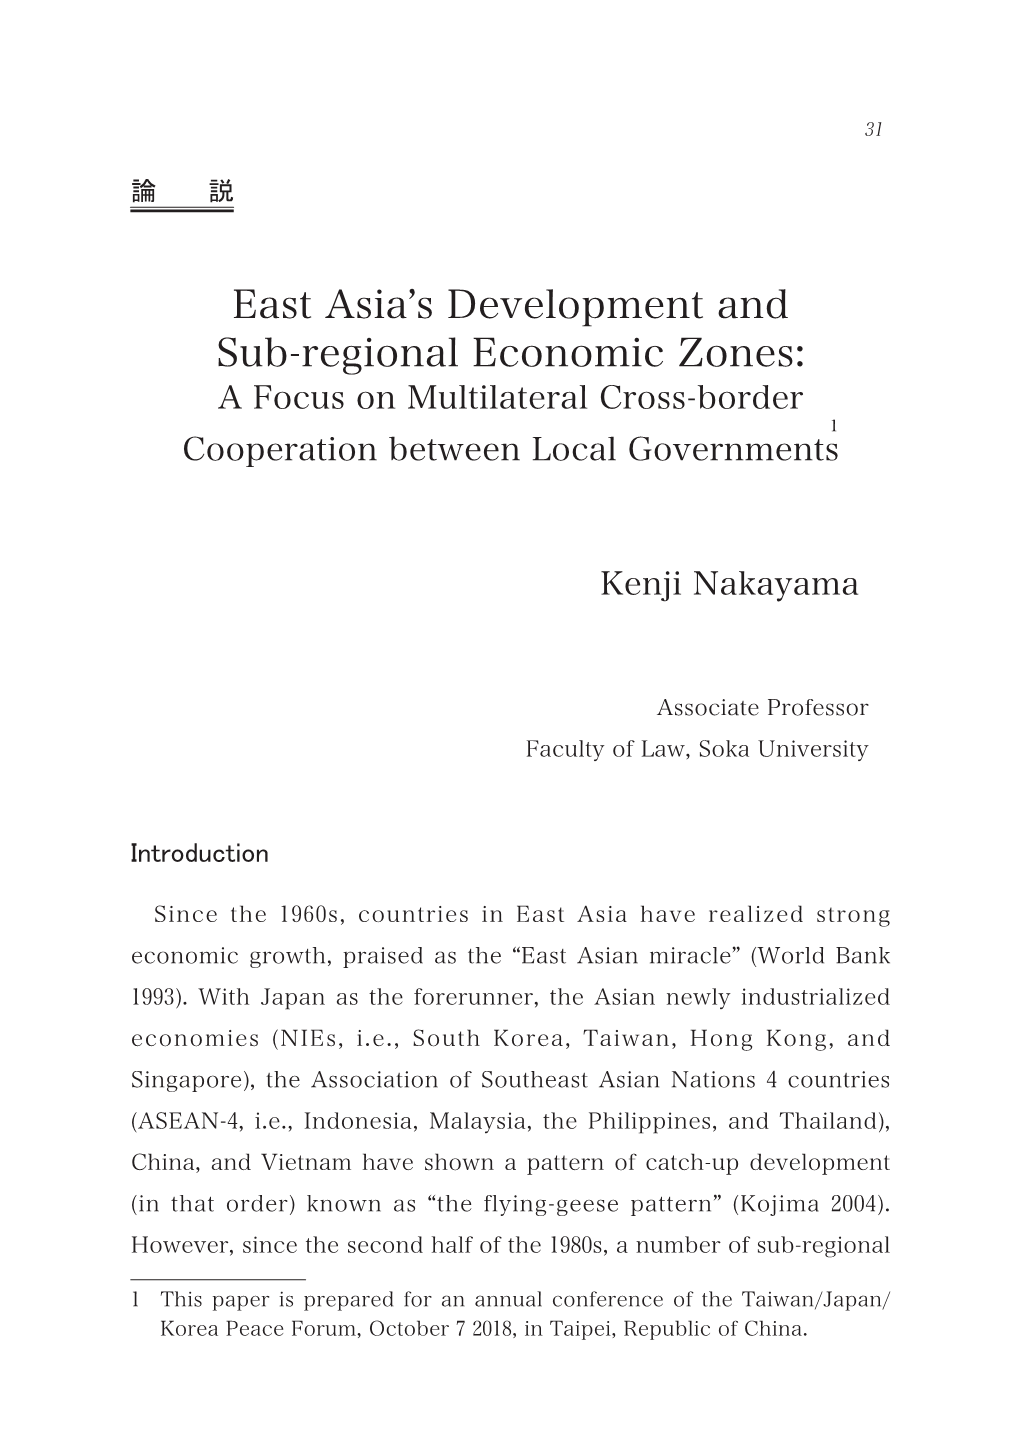 East Asia's Development and Sub-Regional Economic Zones